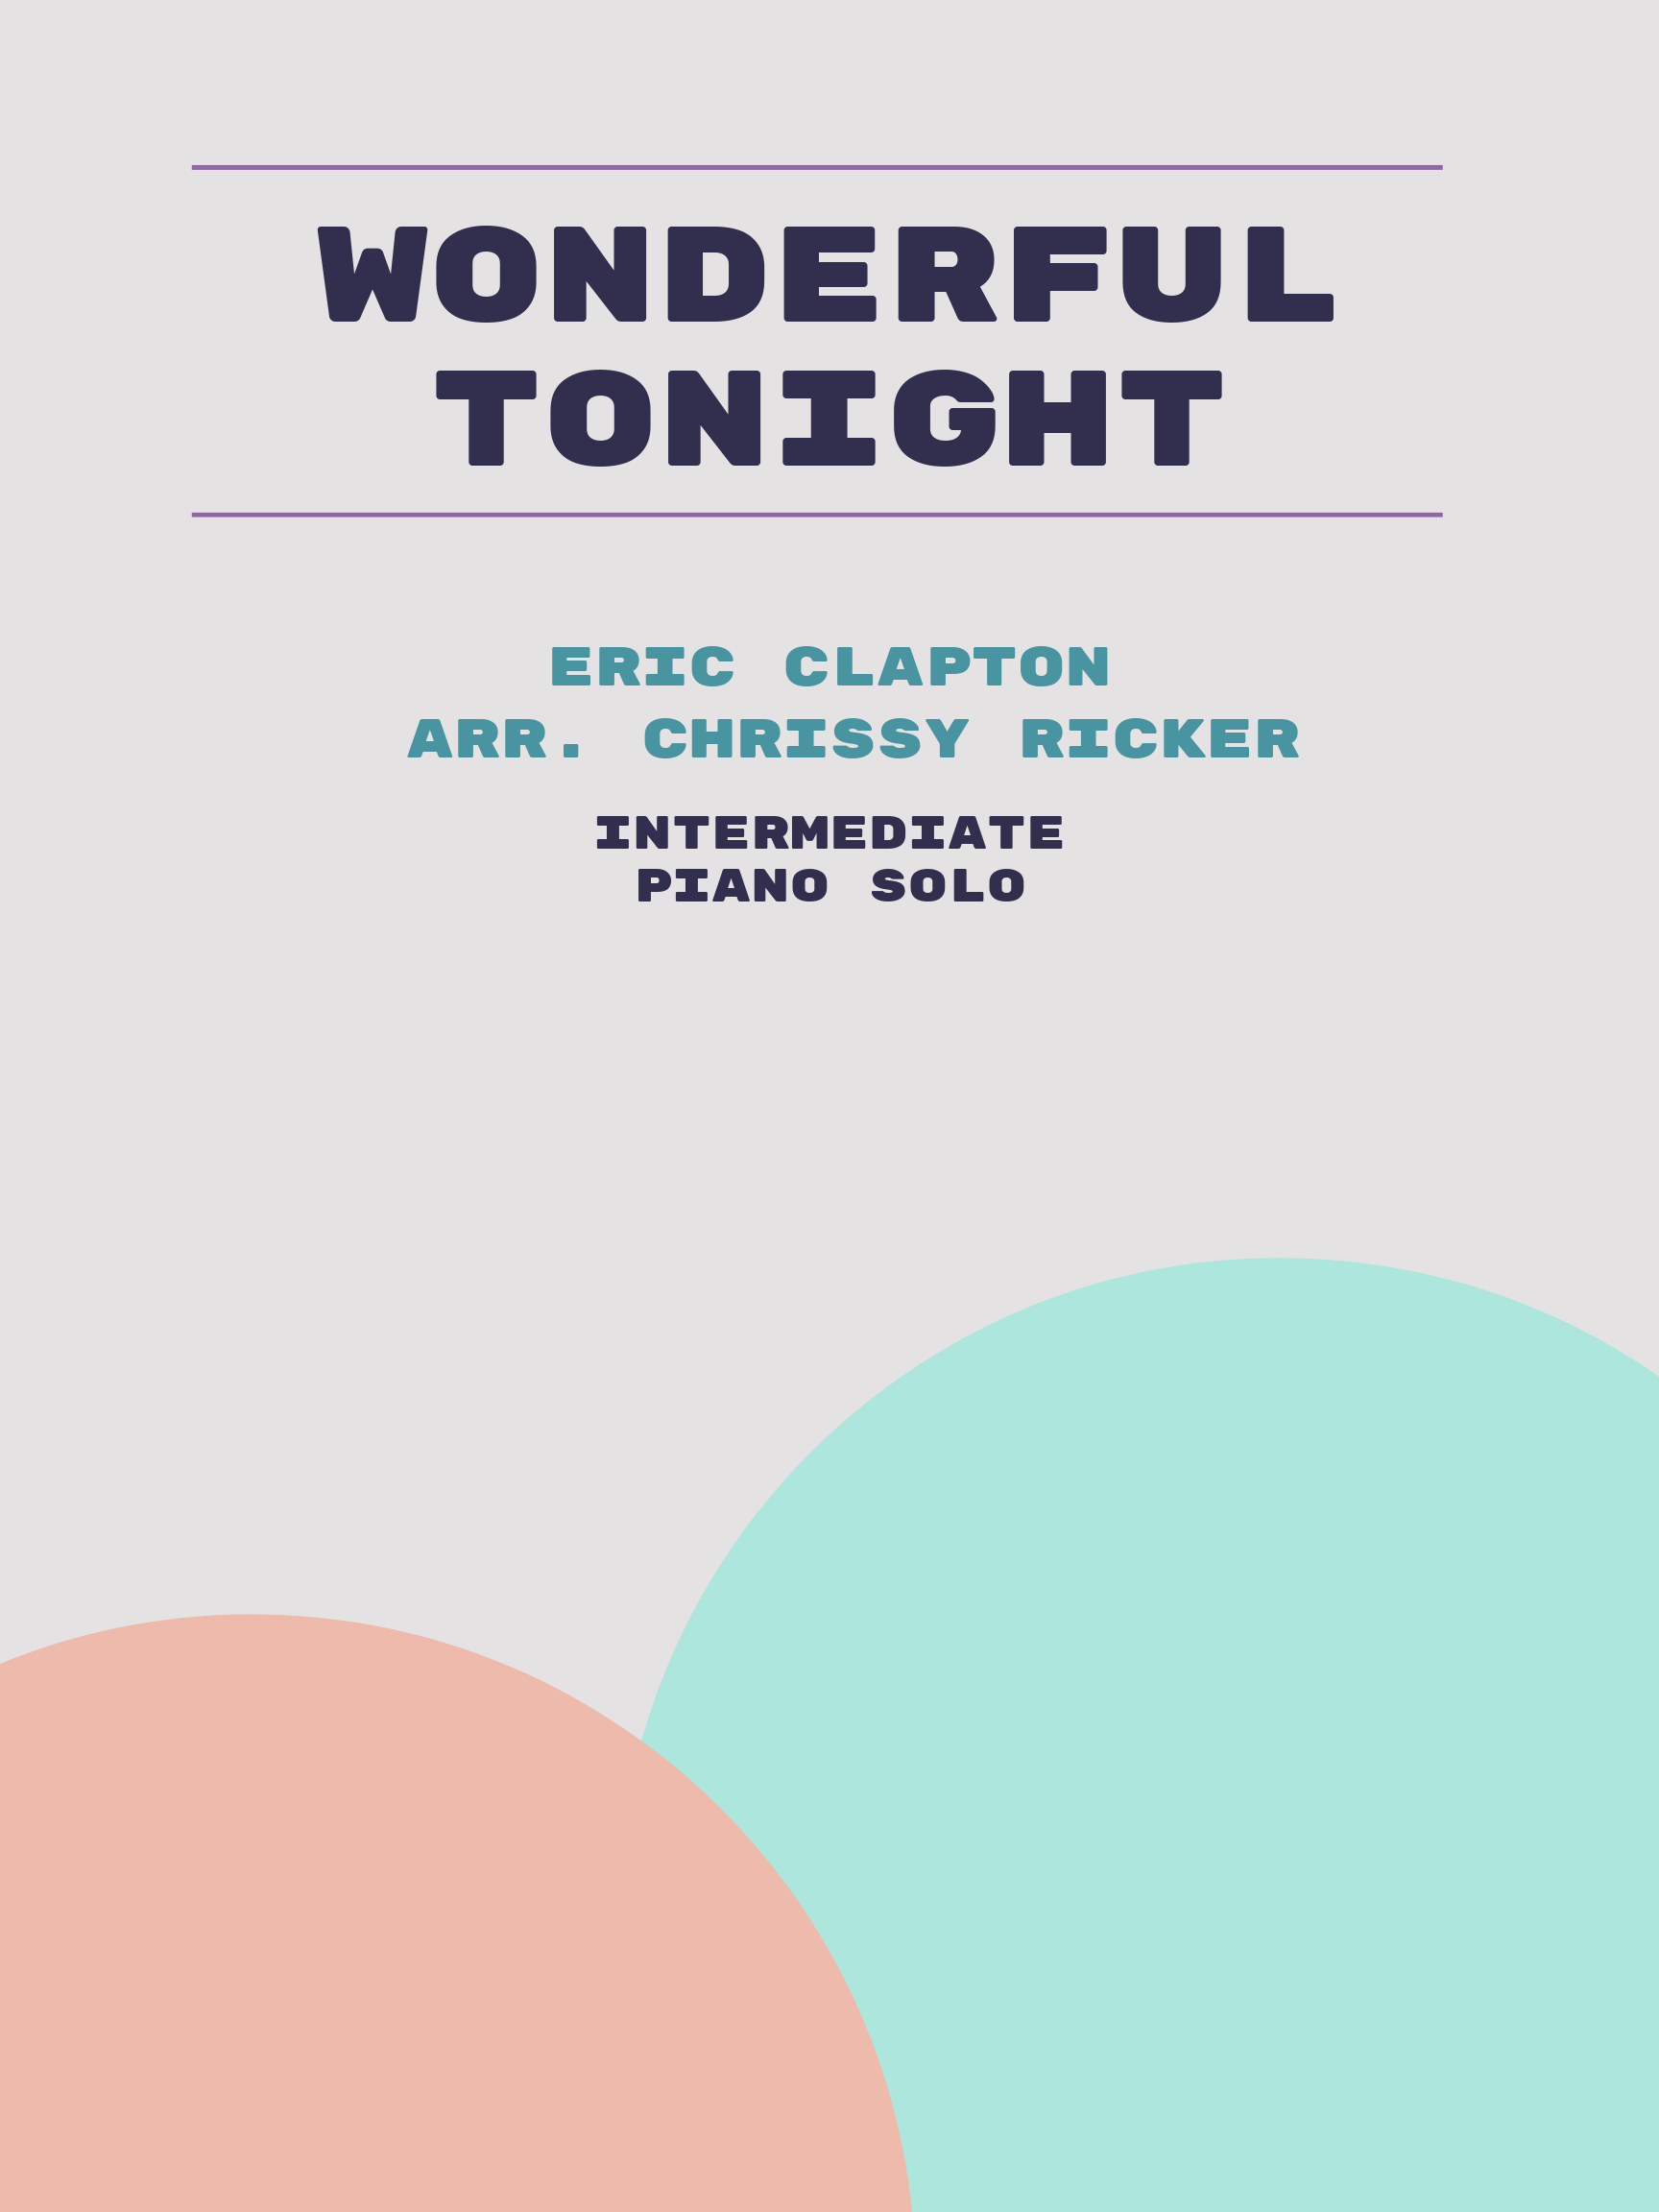 Wonderful Tonight by Eric Clapton